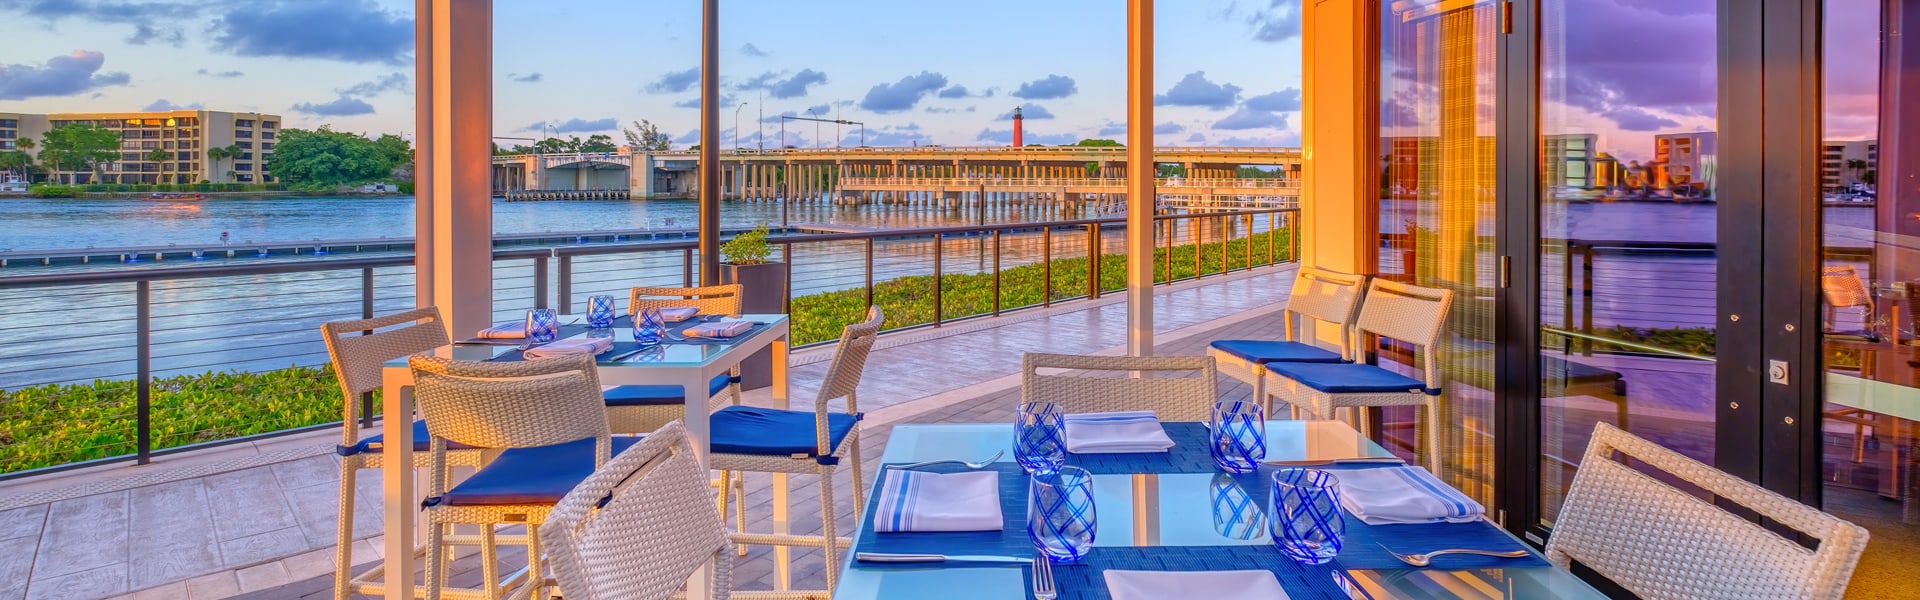 1000 NORTH – Waterfront Restaurant & Private Club in Jupiter, Florida